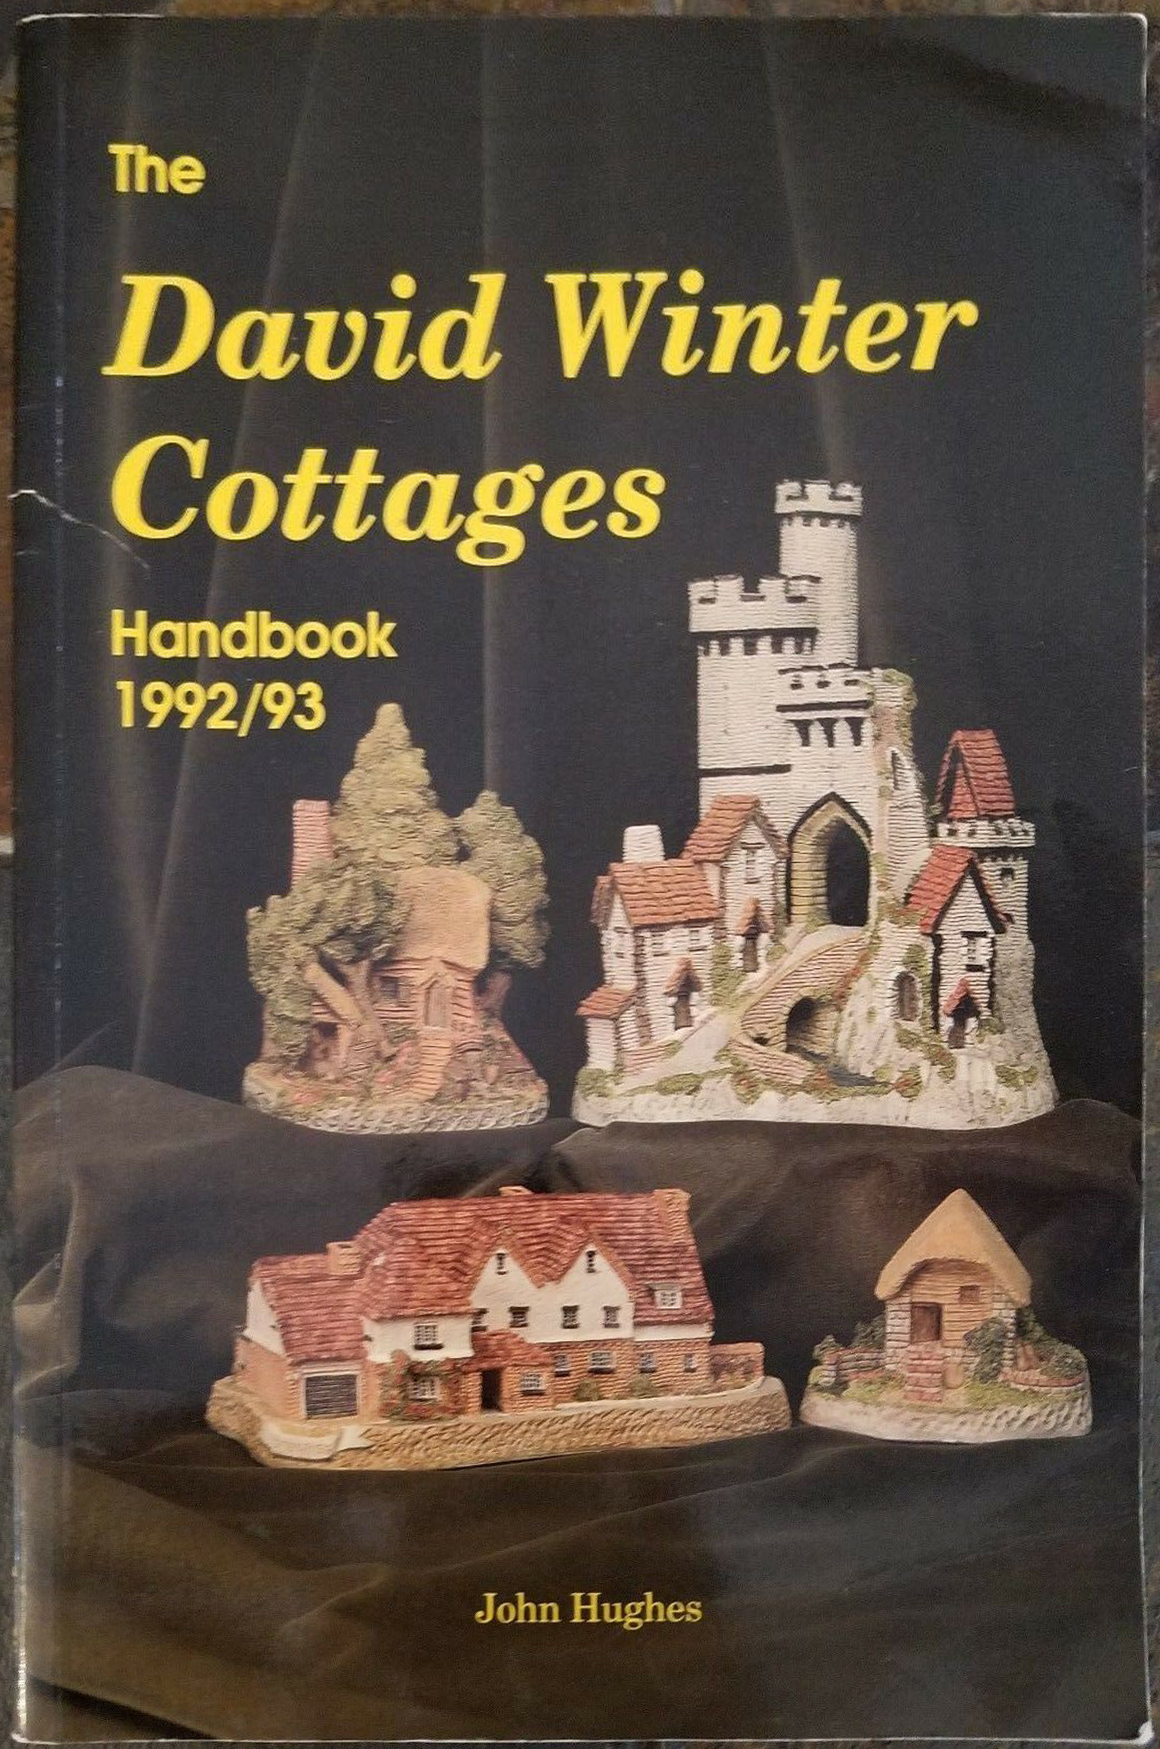 The David Winter Cottages Handbook by John Hughes